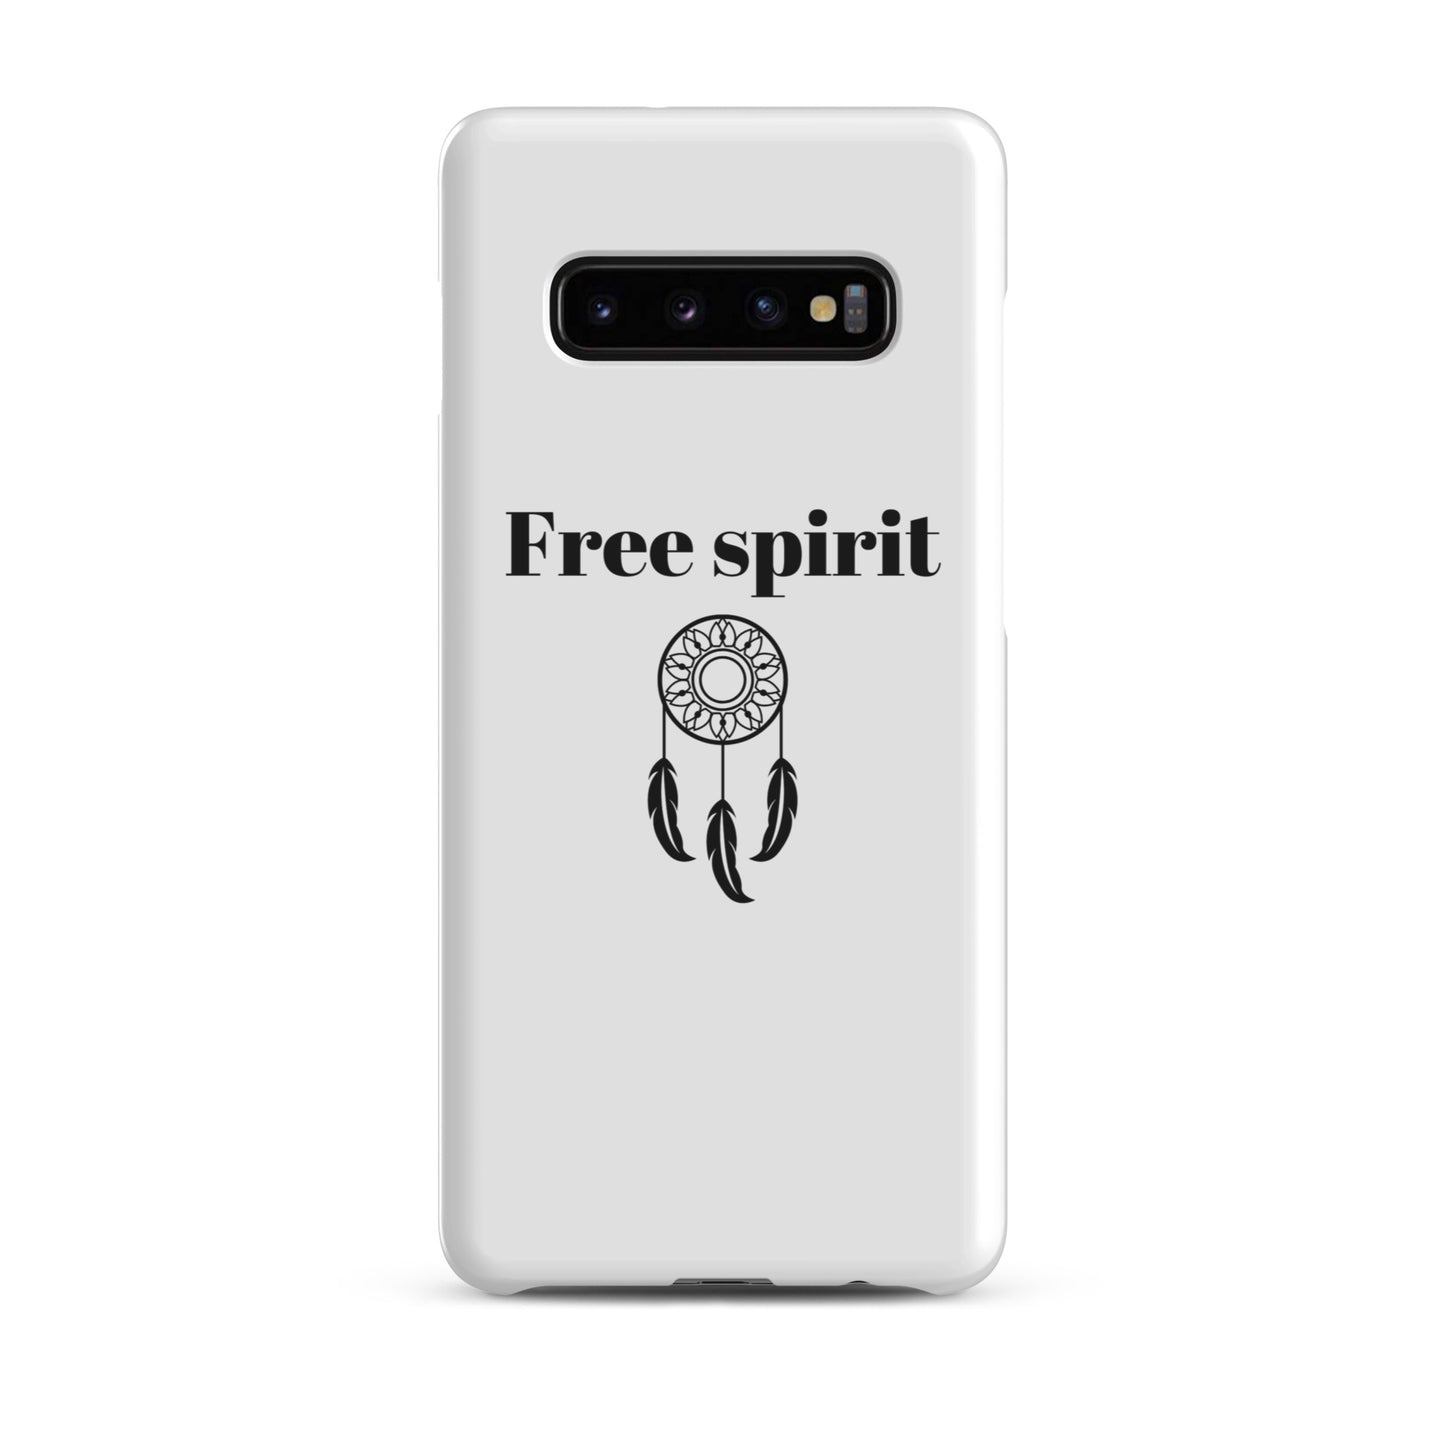 Snap case for Samsung® free spirit